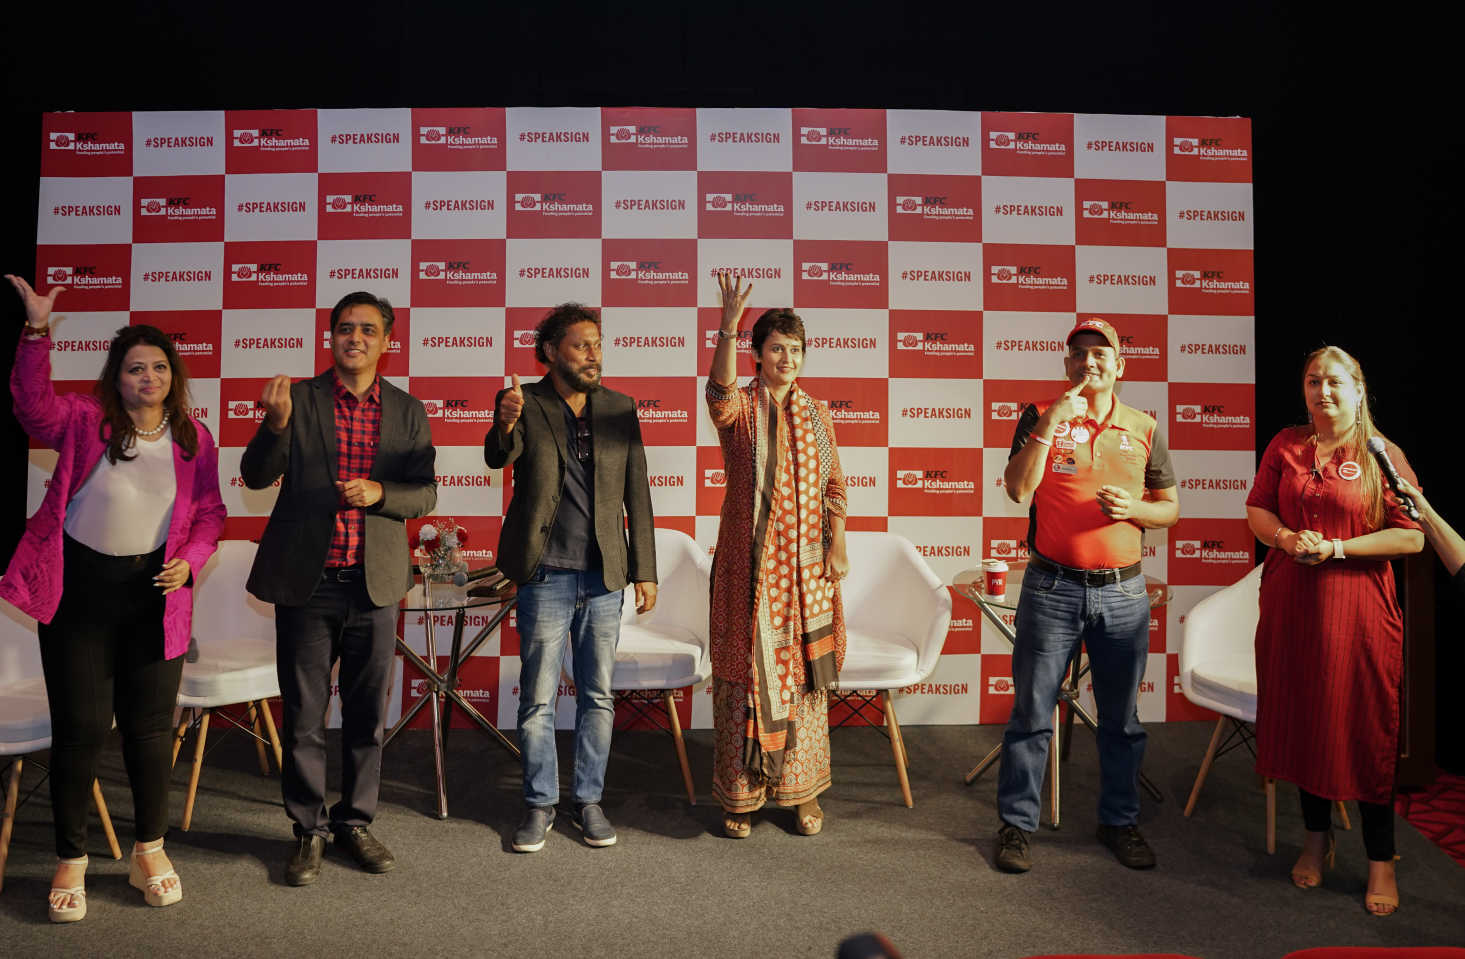 Winning Moments - KFC Presents Loco India Gaming Awards